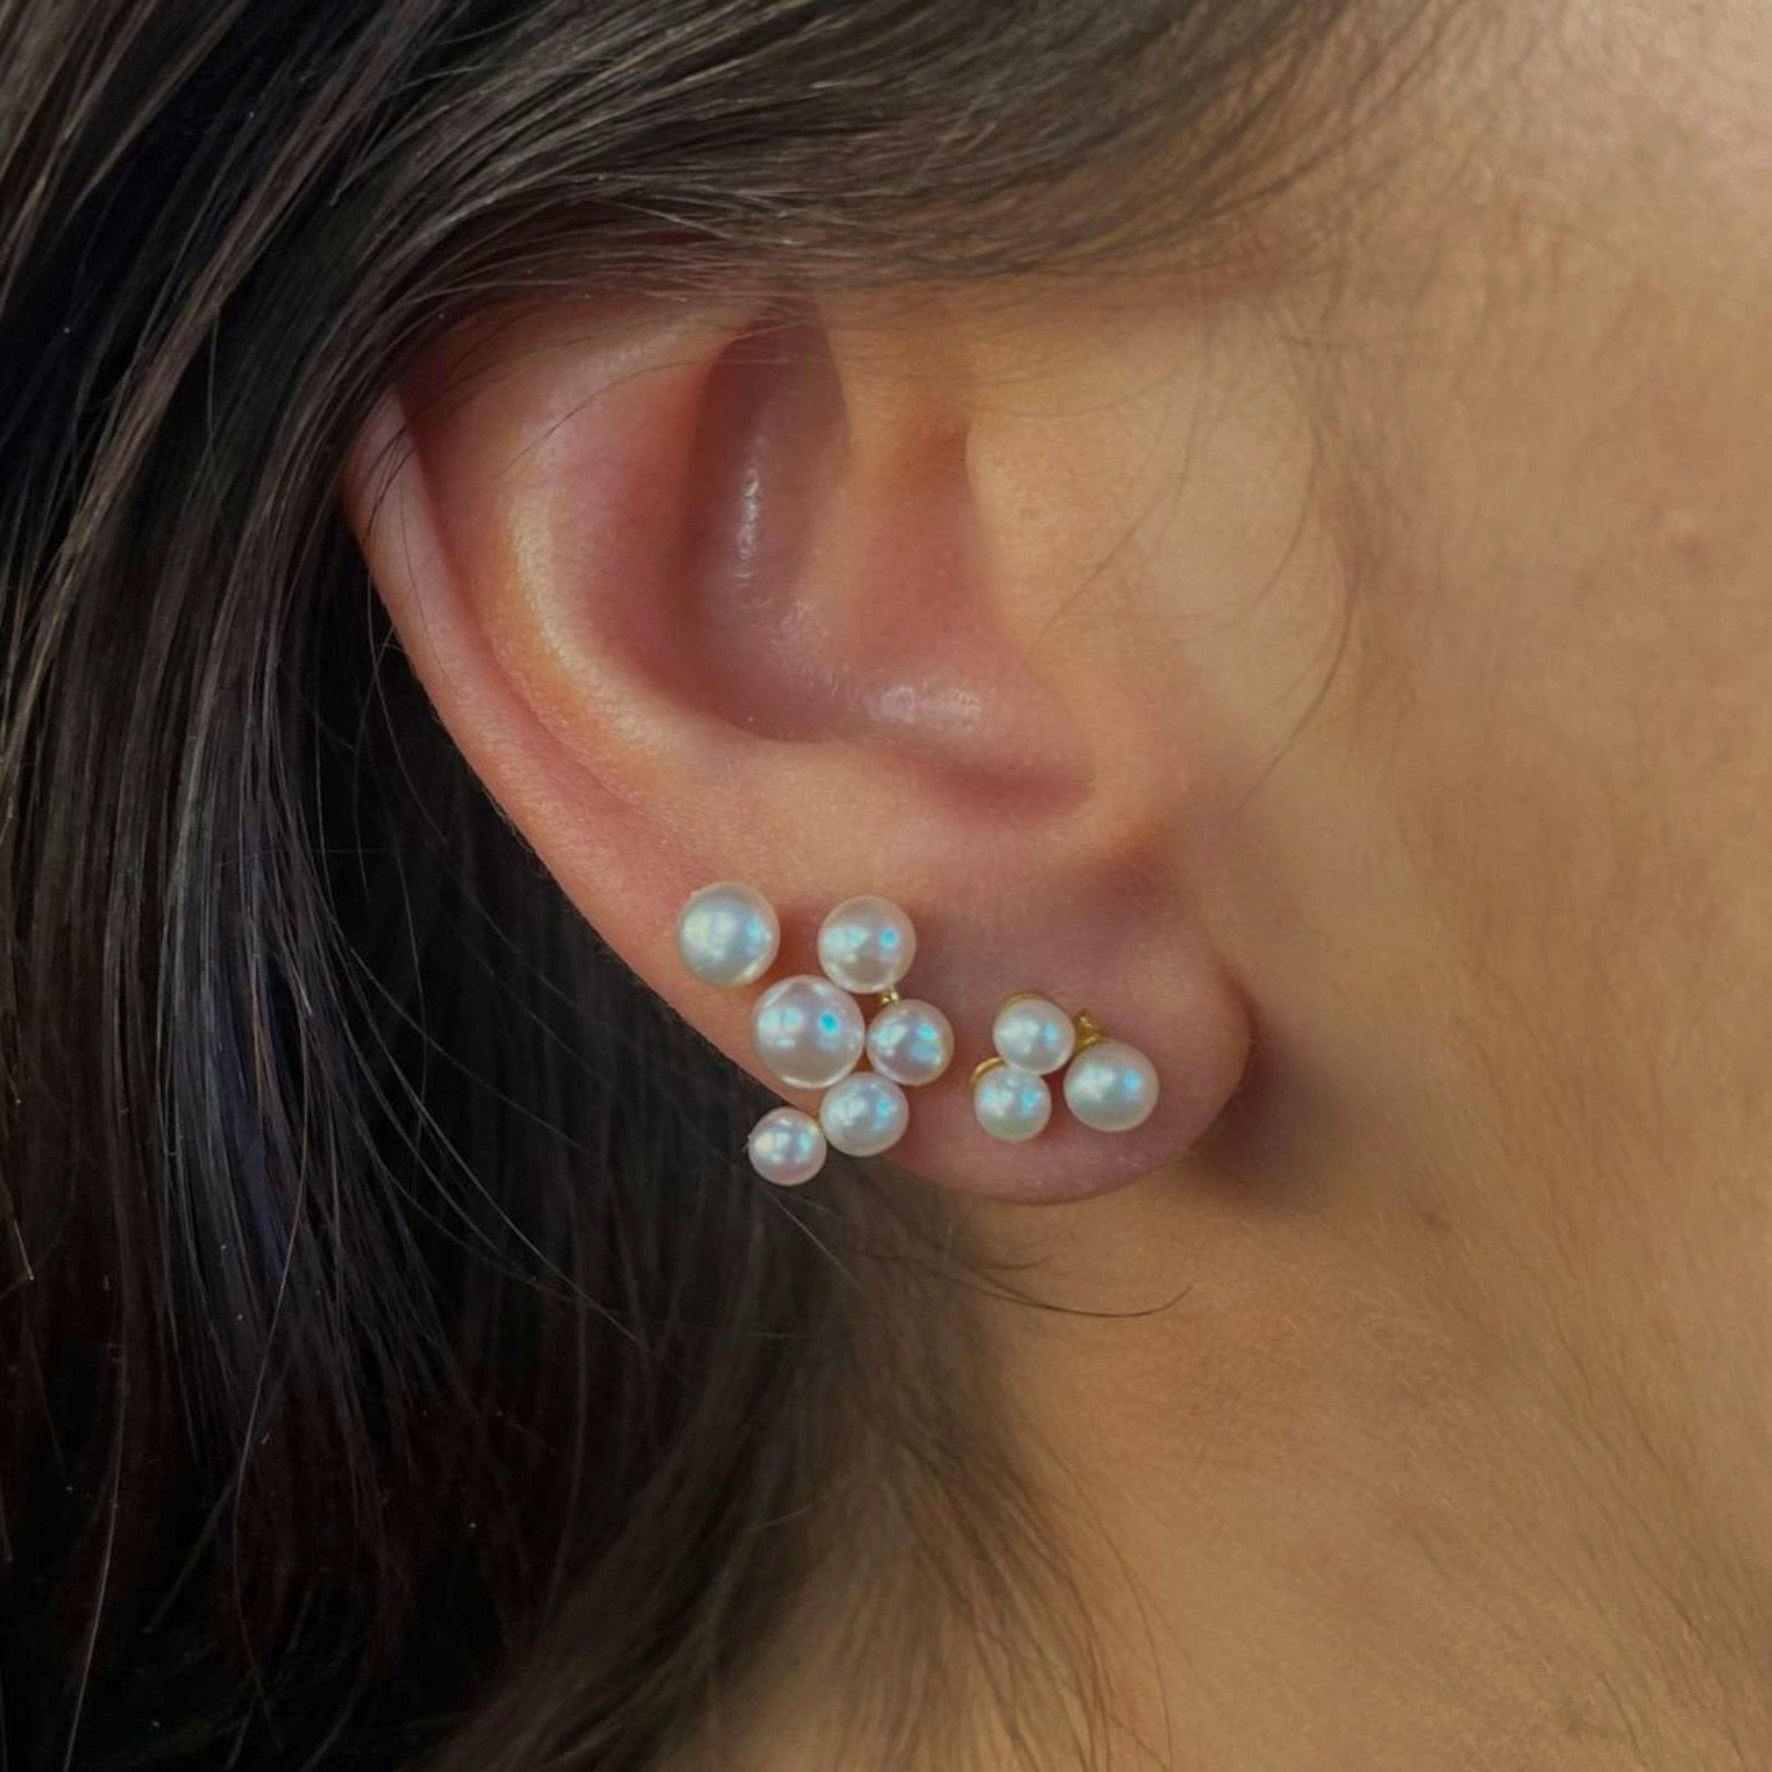 Bloom Berries Earring von STINE A Jewelry in Vergoldet-Silber Sterling 925